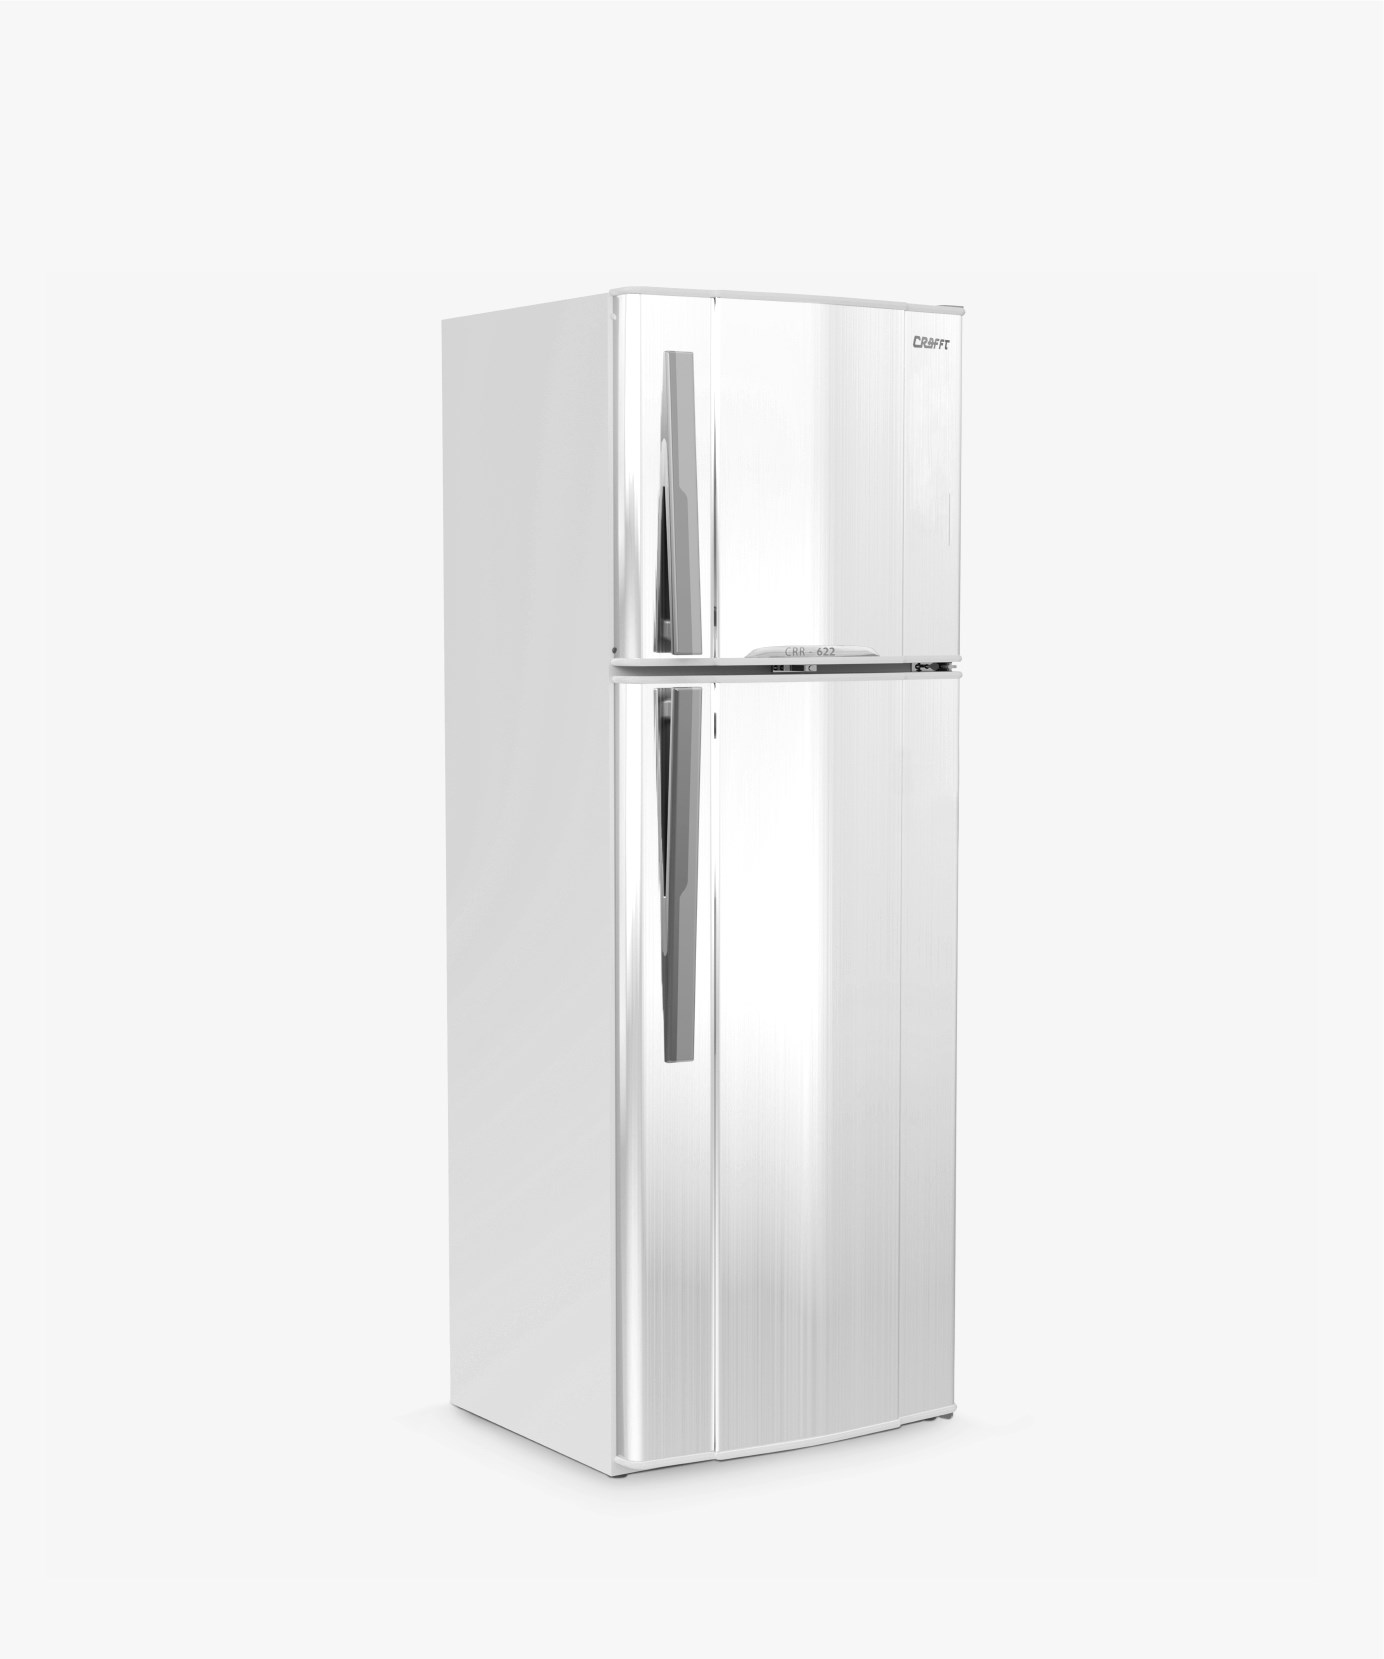 22 Feet white Refrigerator||Refrigerators 